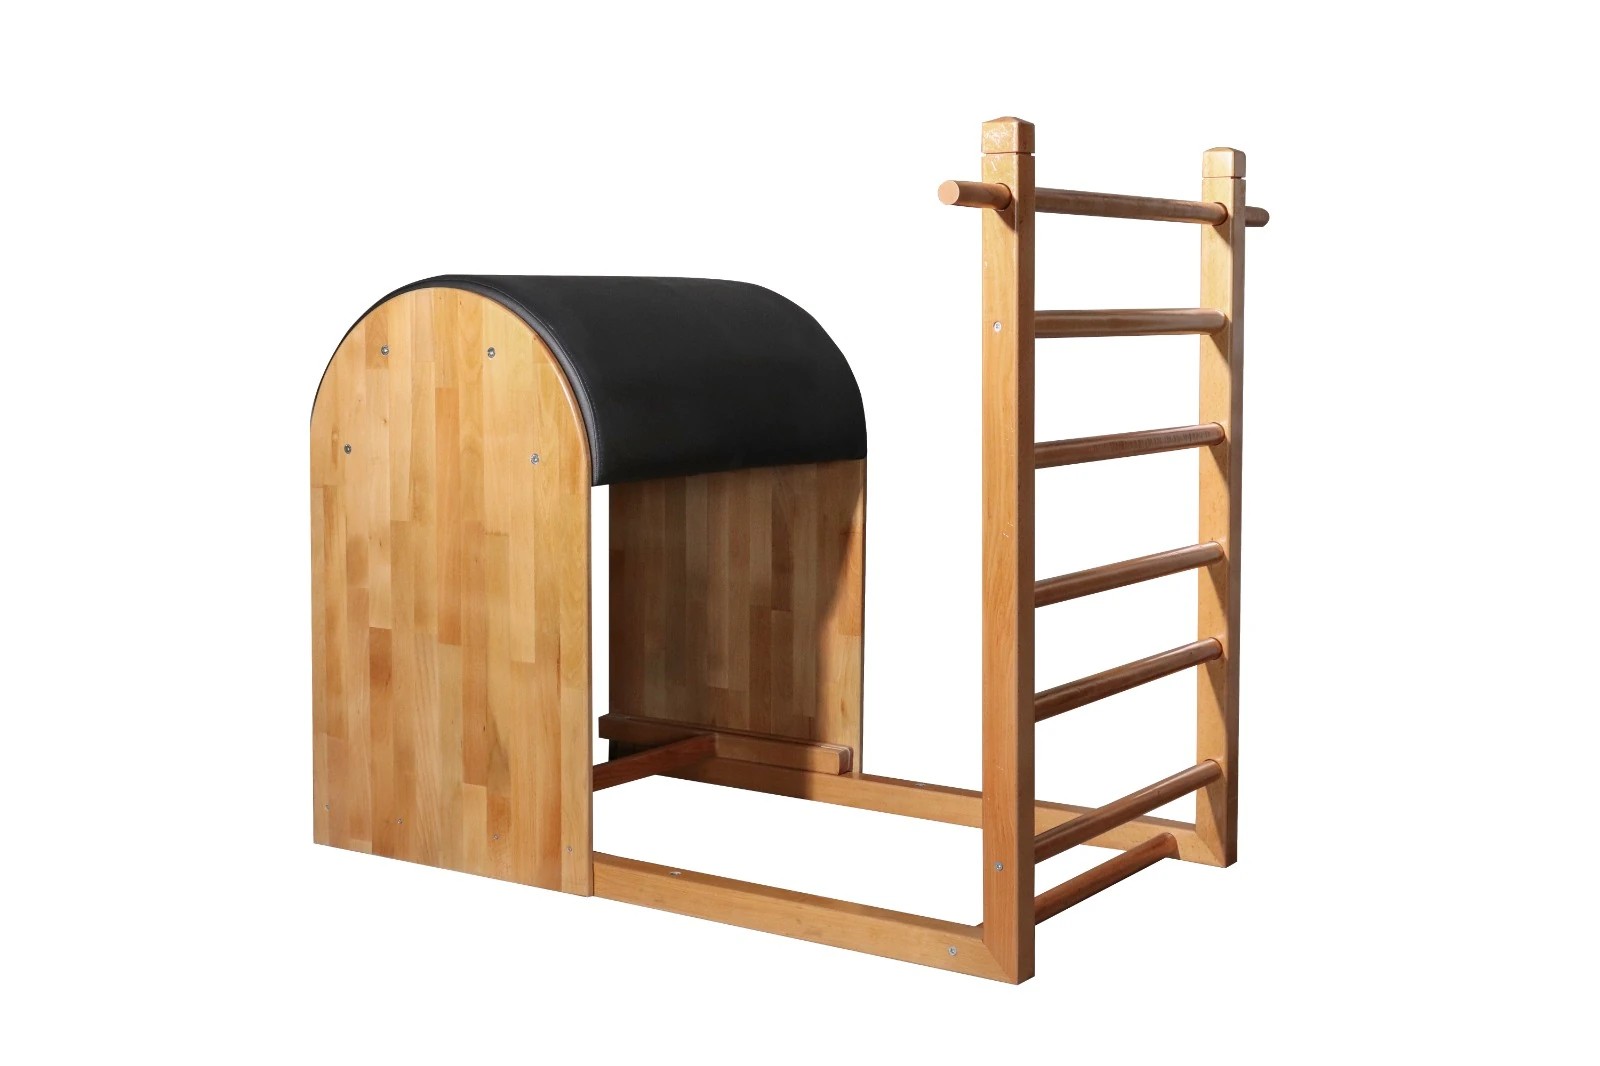 Ladder Barrel Pilates Equipment